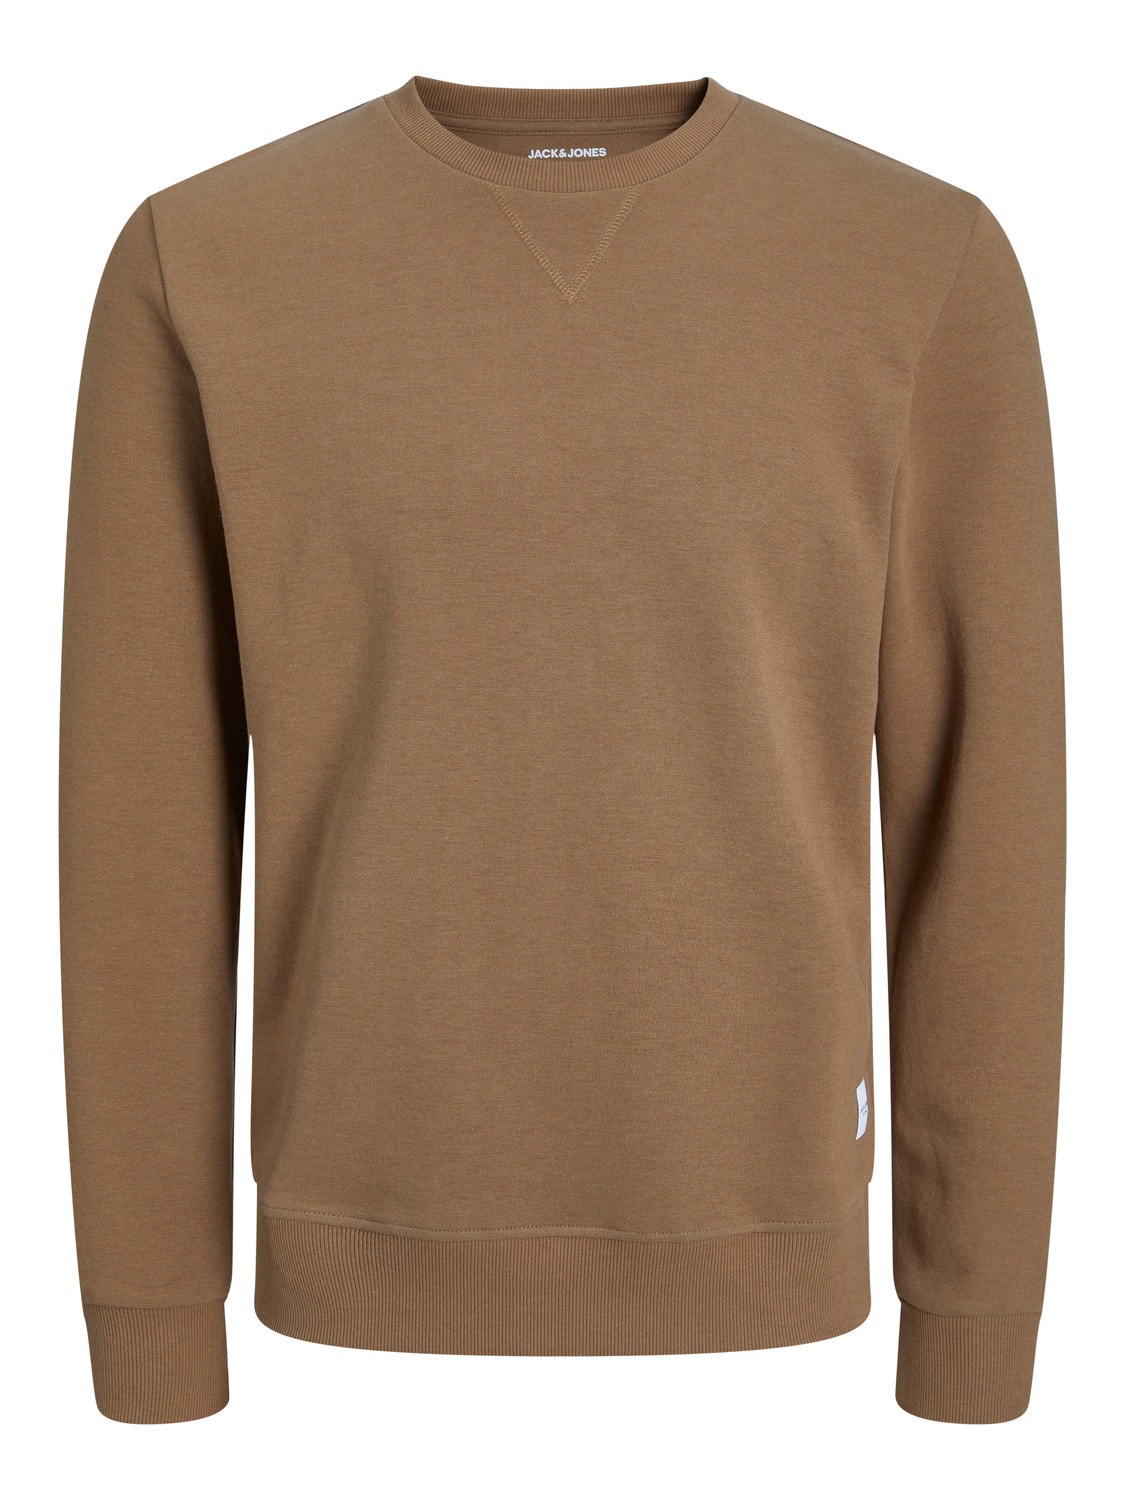 Jack & Jones Plain Sweatshirt -Otter - 12181903